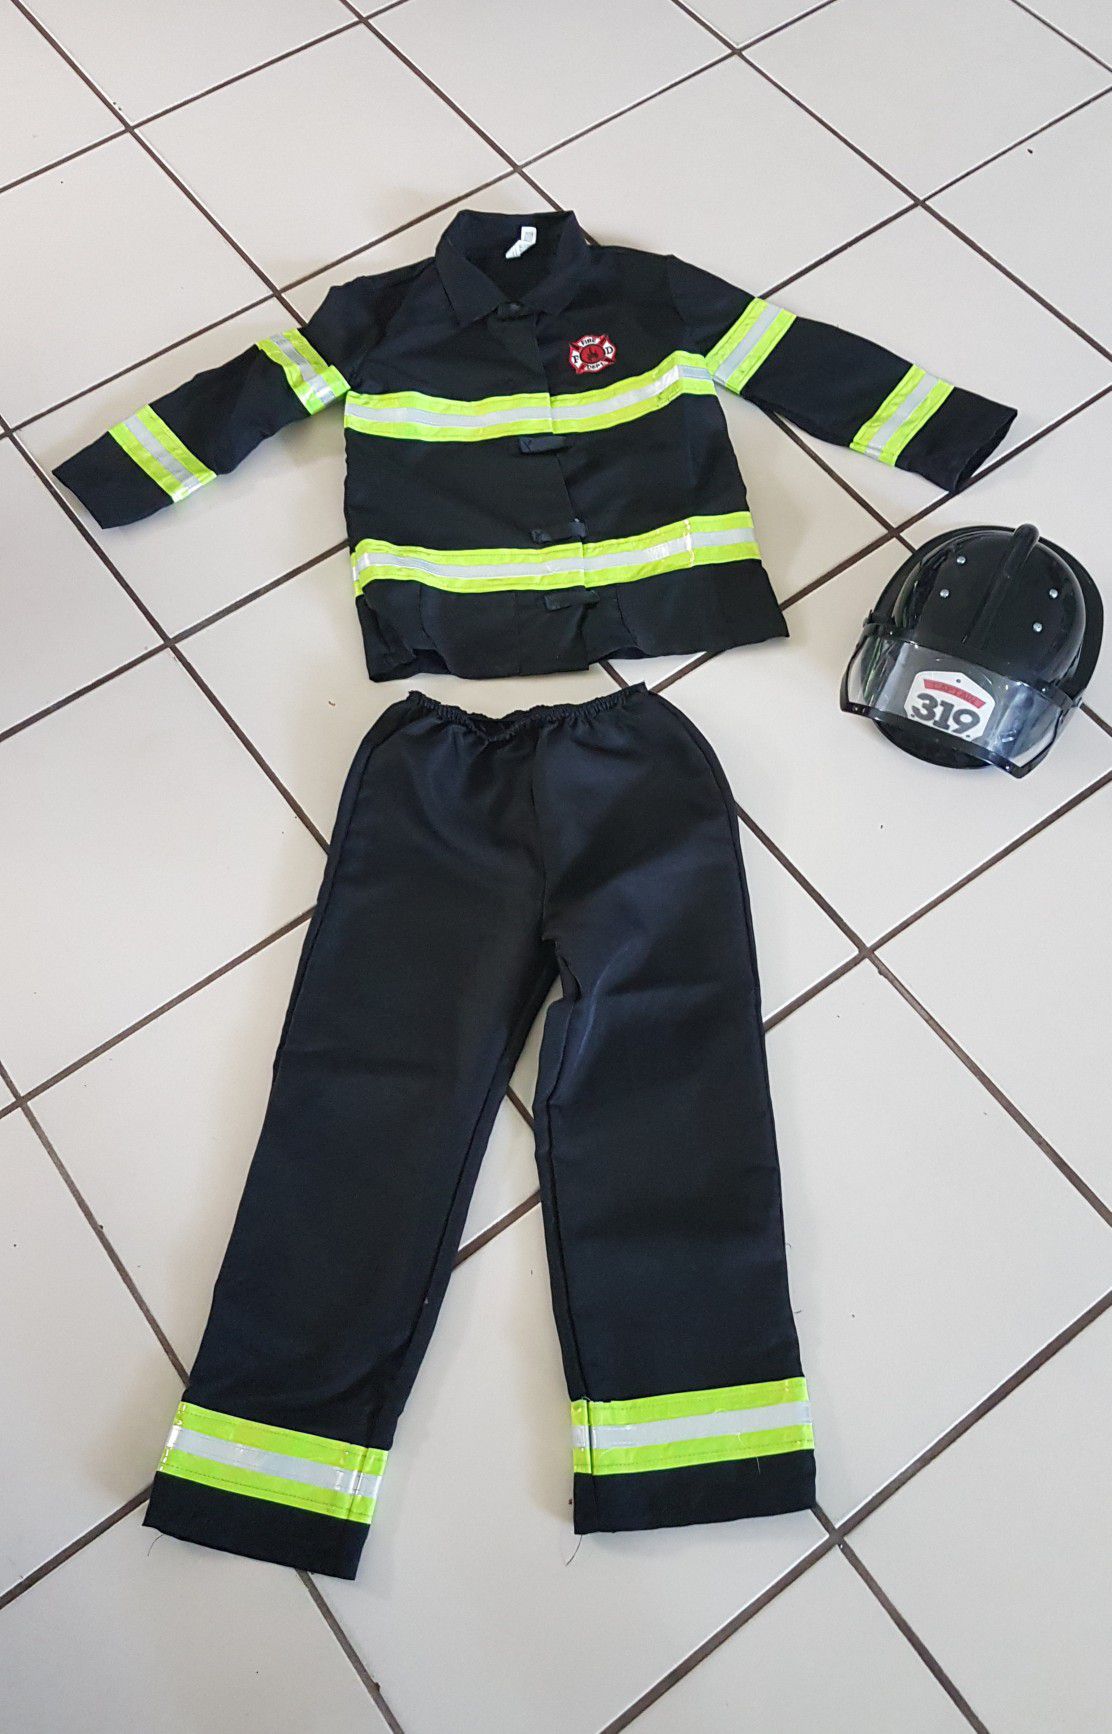 Firefighter (Halloween) Costume, Age 8-10